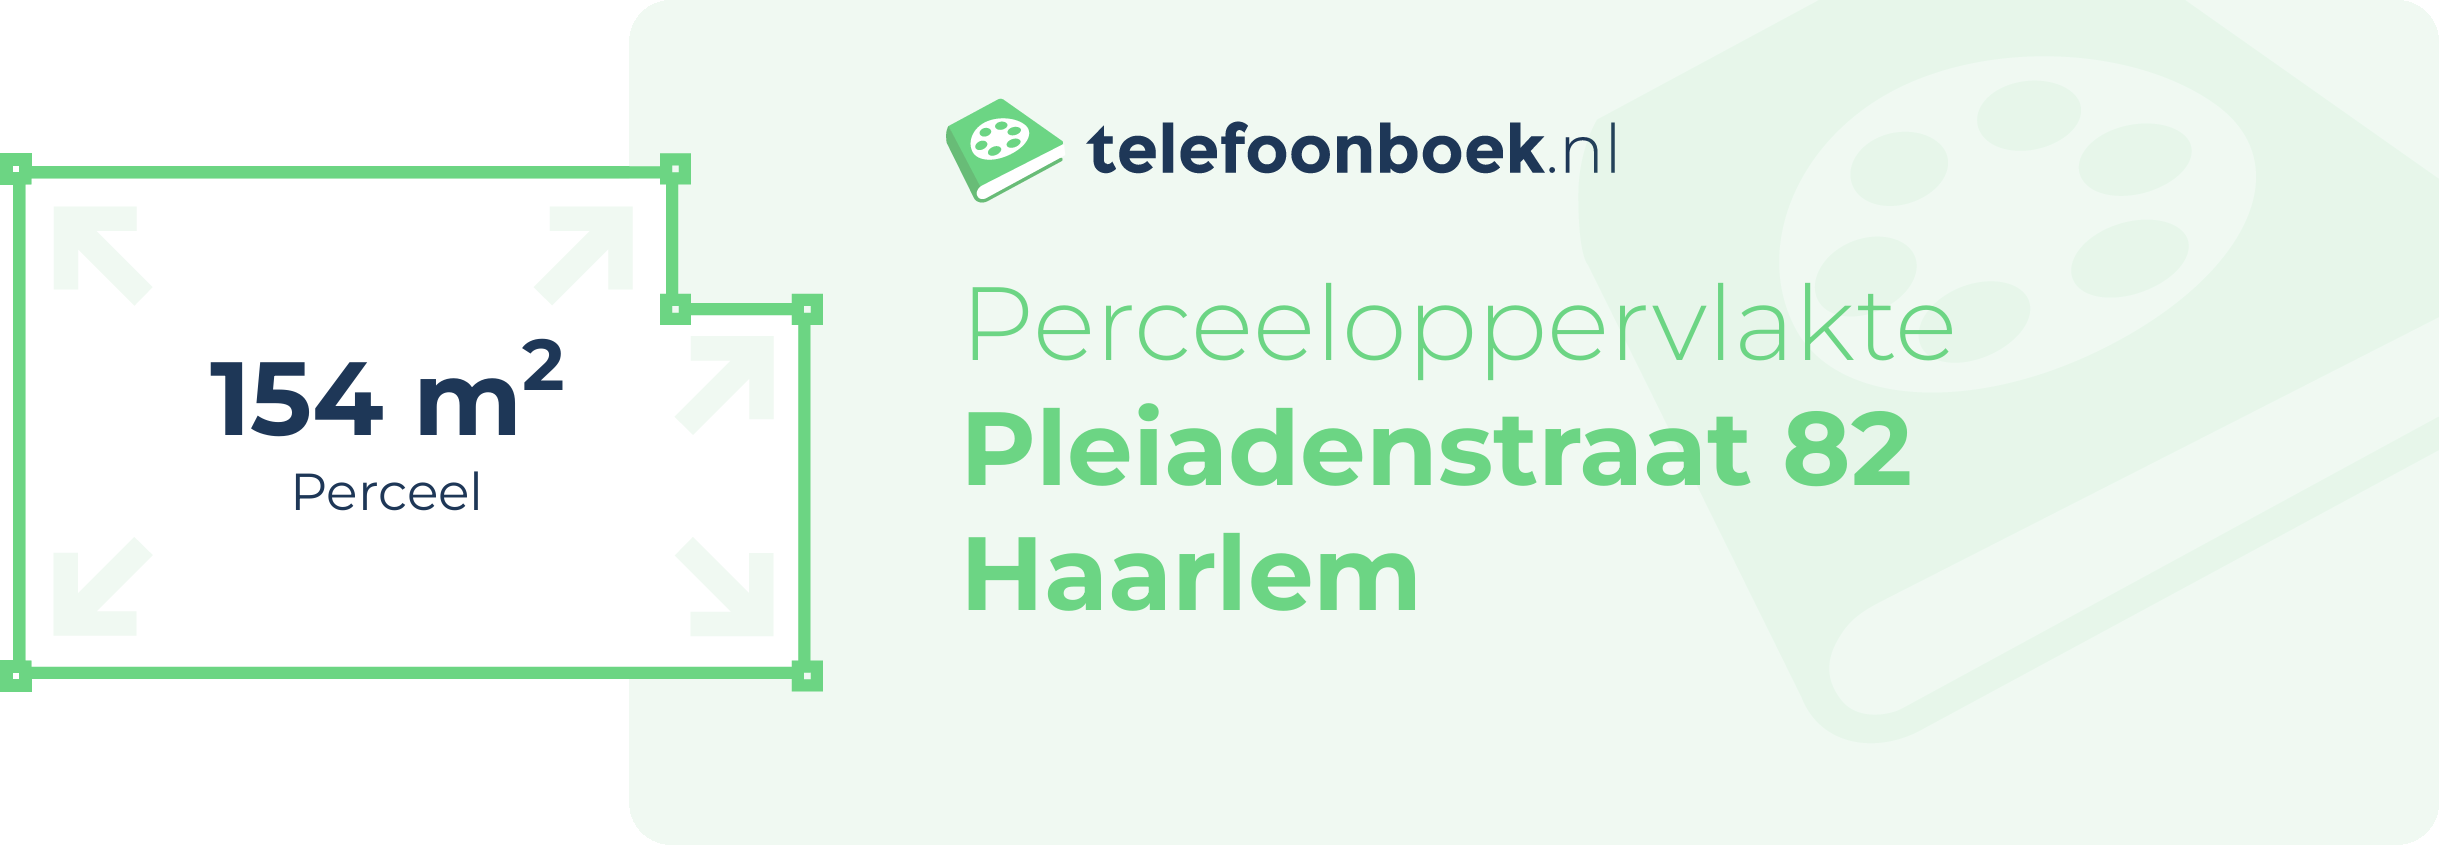 Perceeloppervlakte Pleiadenstraat 82 Haarlem